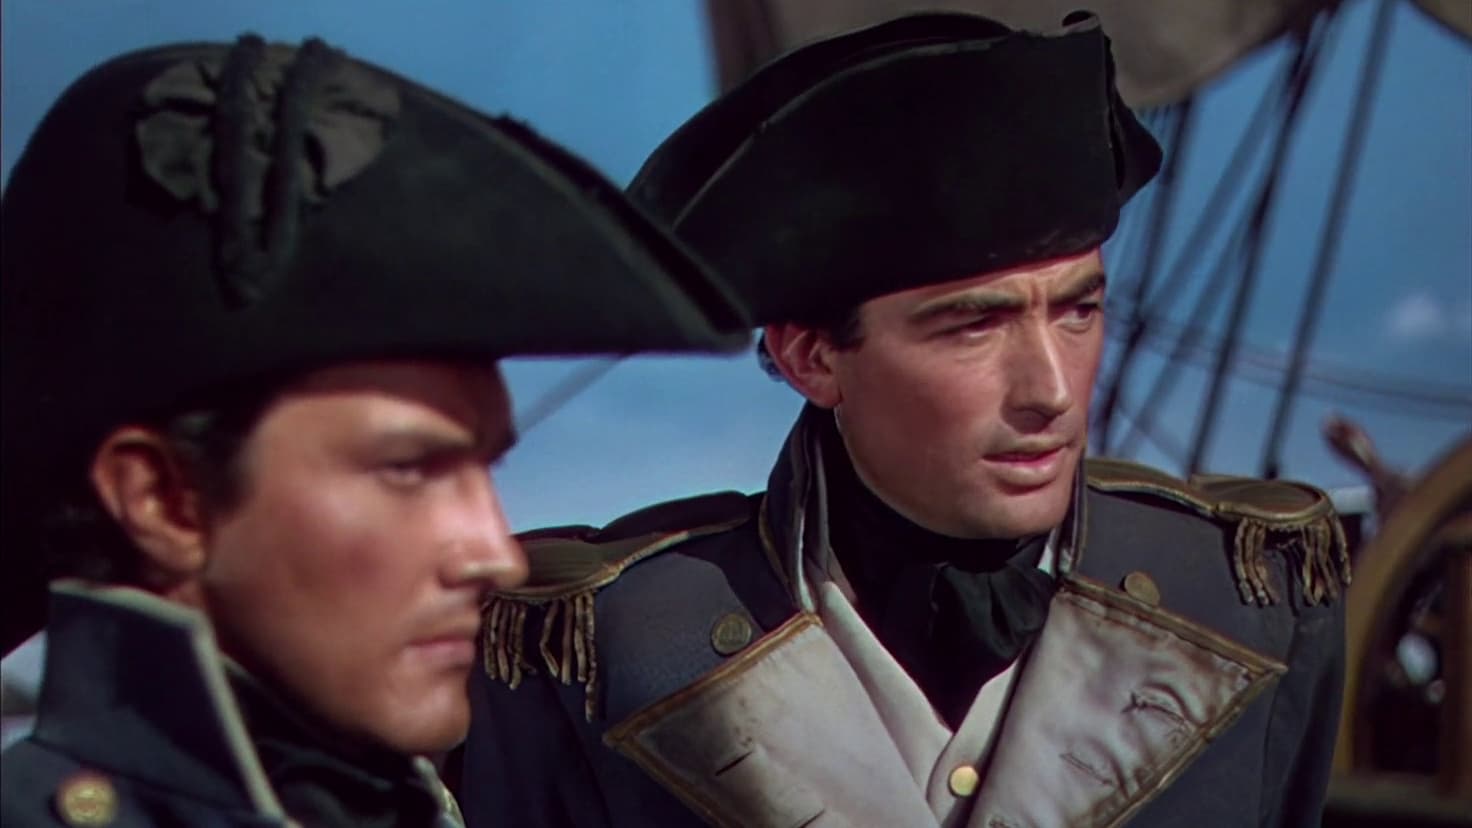 Капитан Горацио (1951)